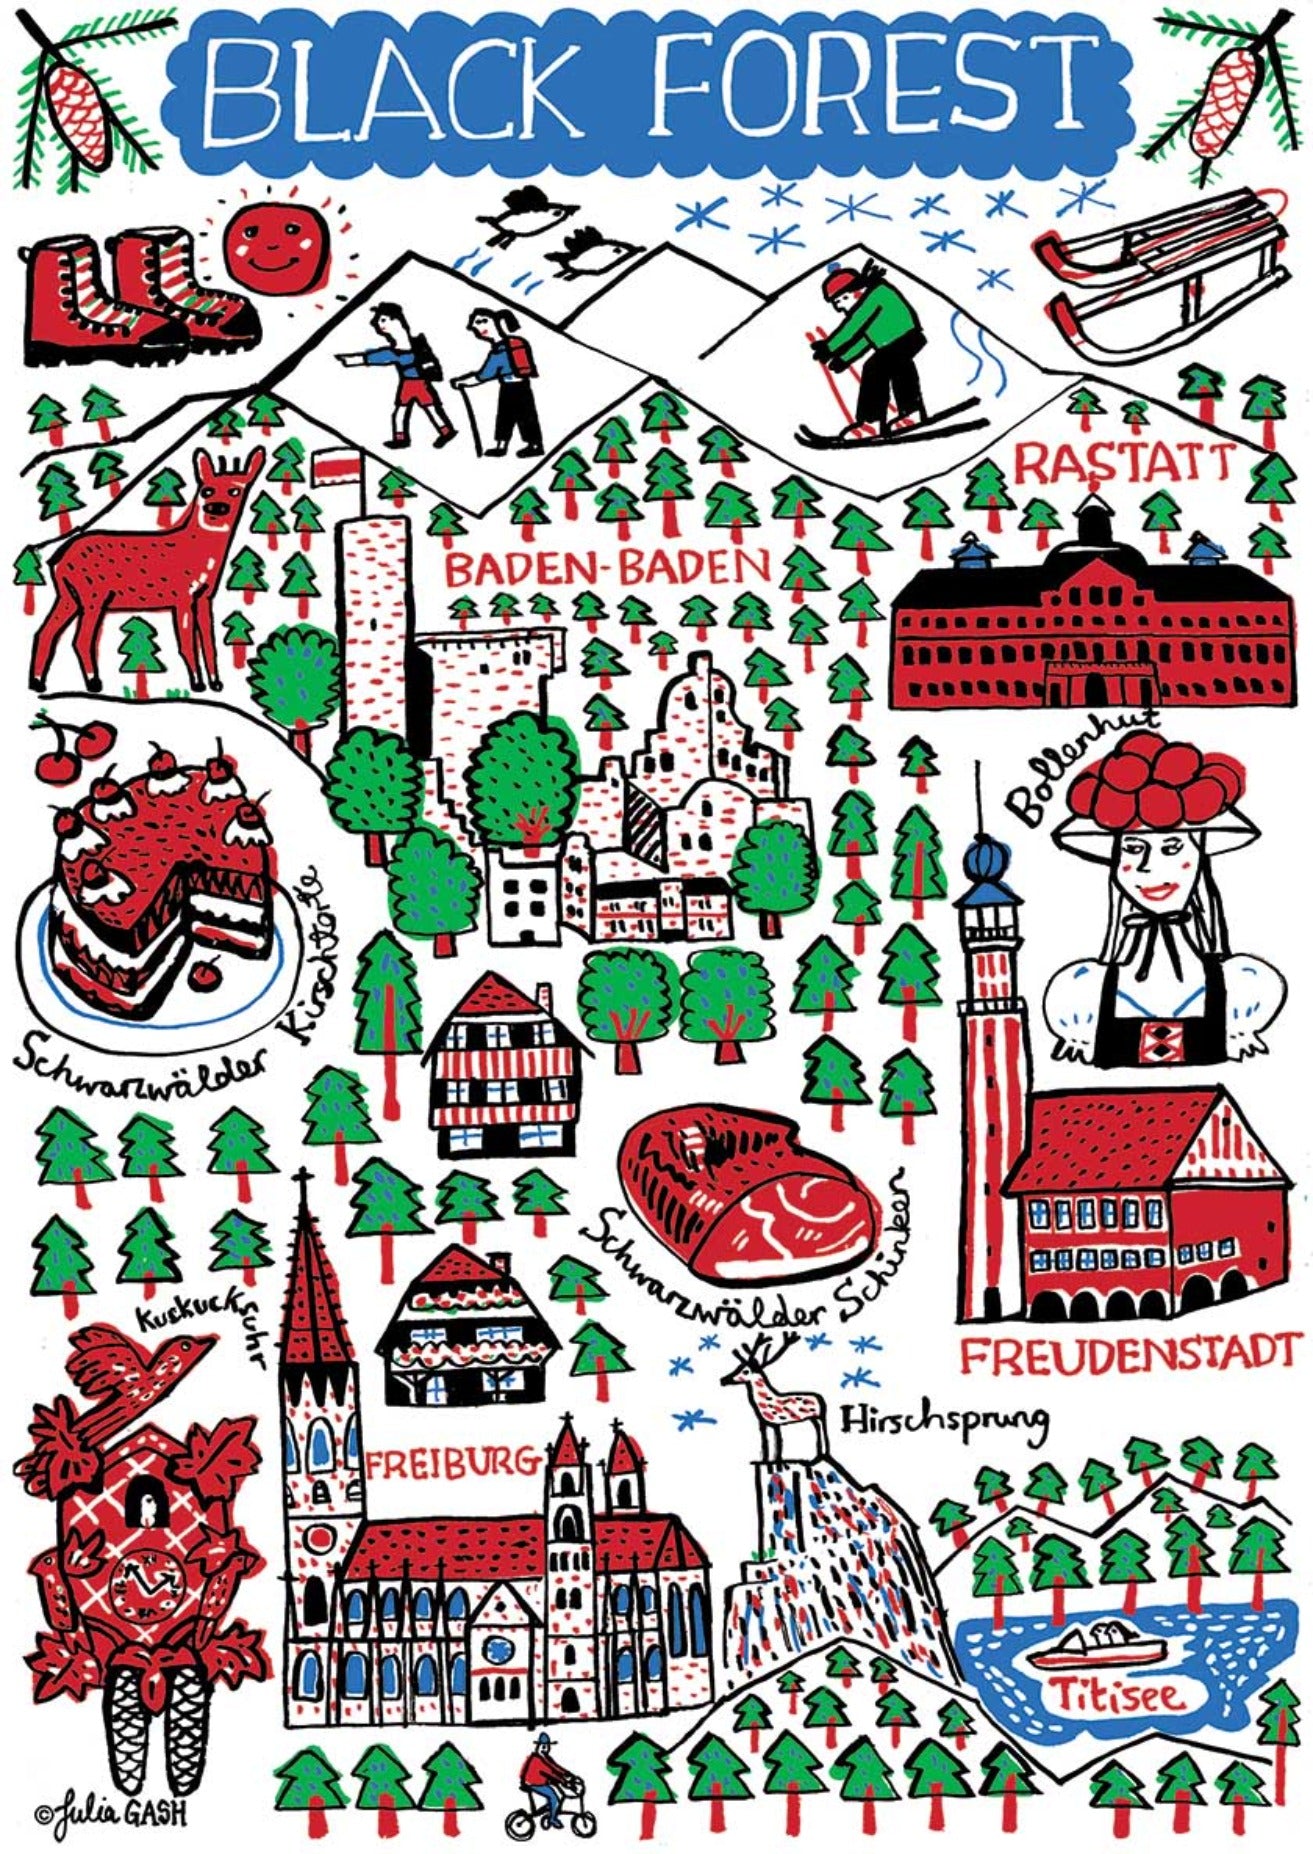 Black Forest Travel Art Print by British Map Artist Julia Gash